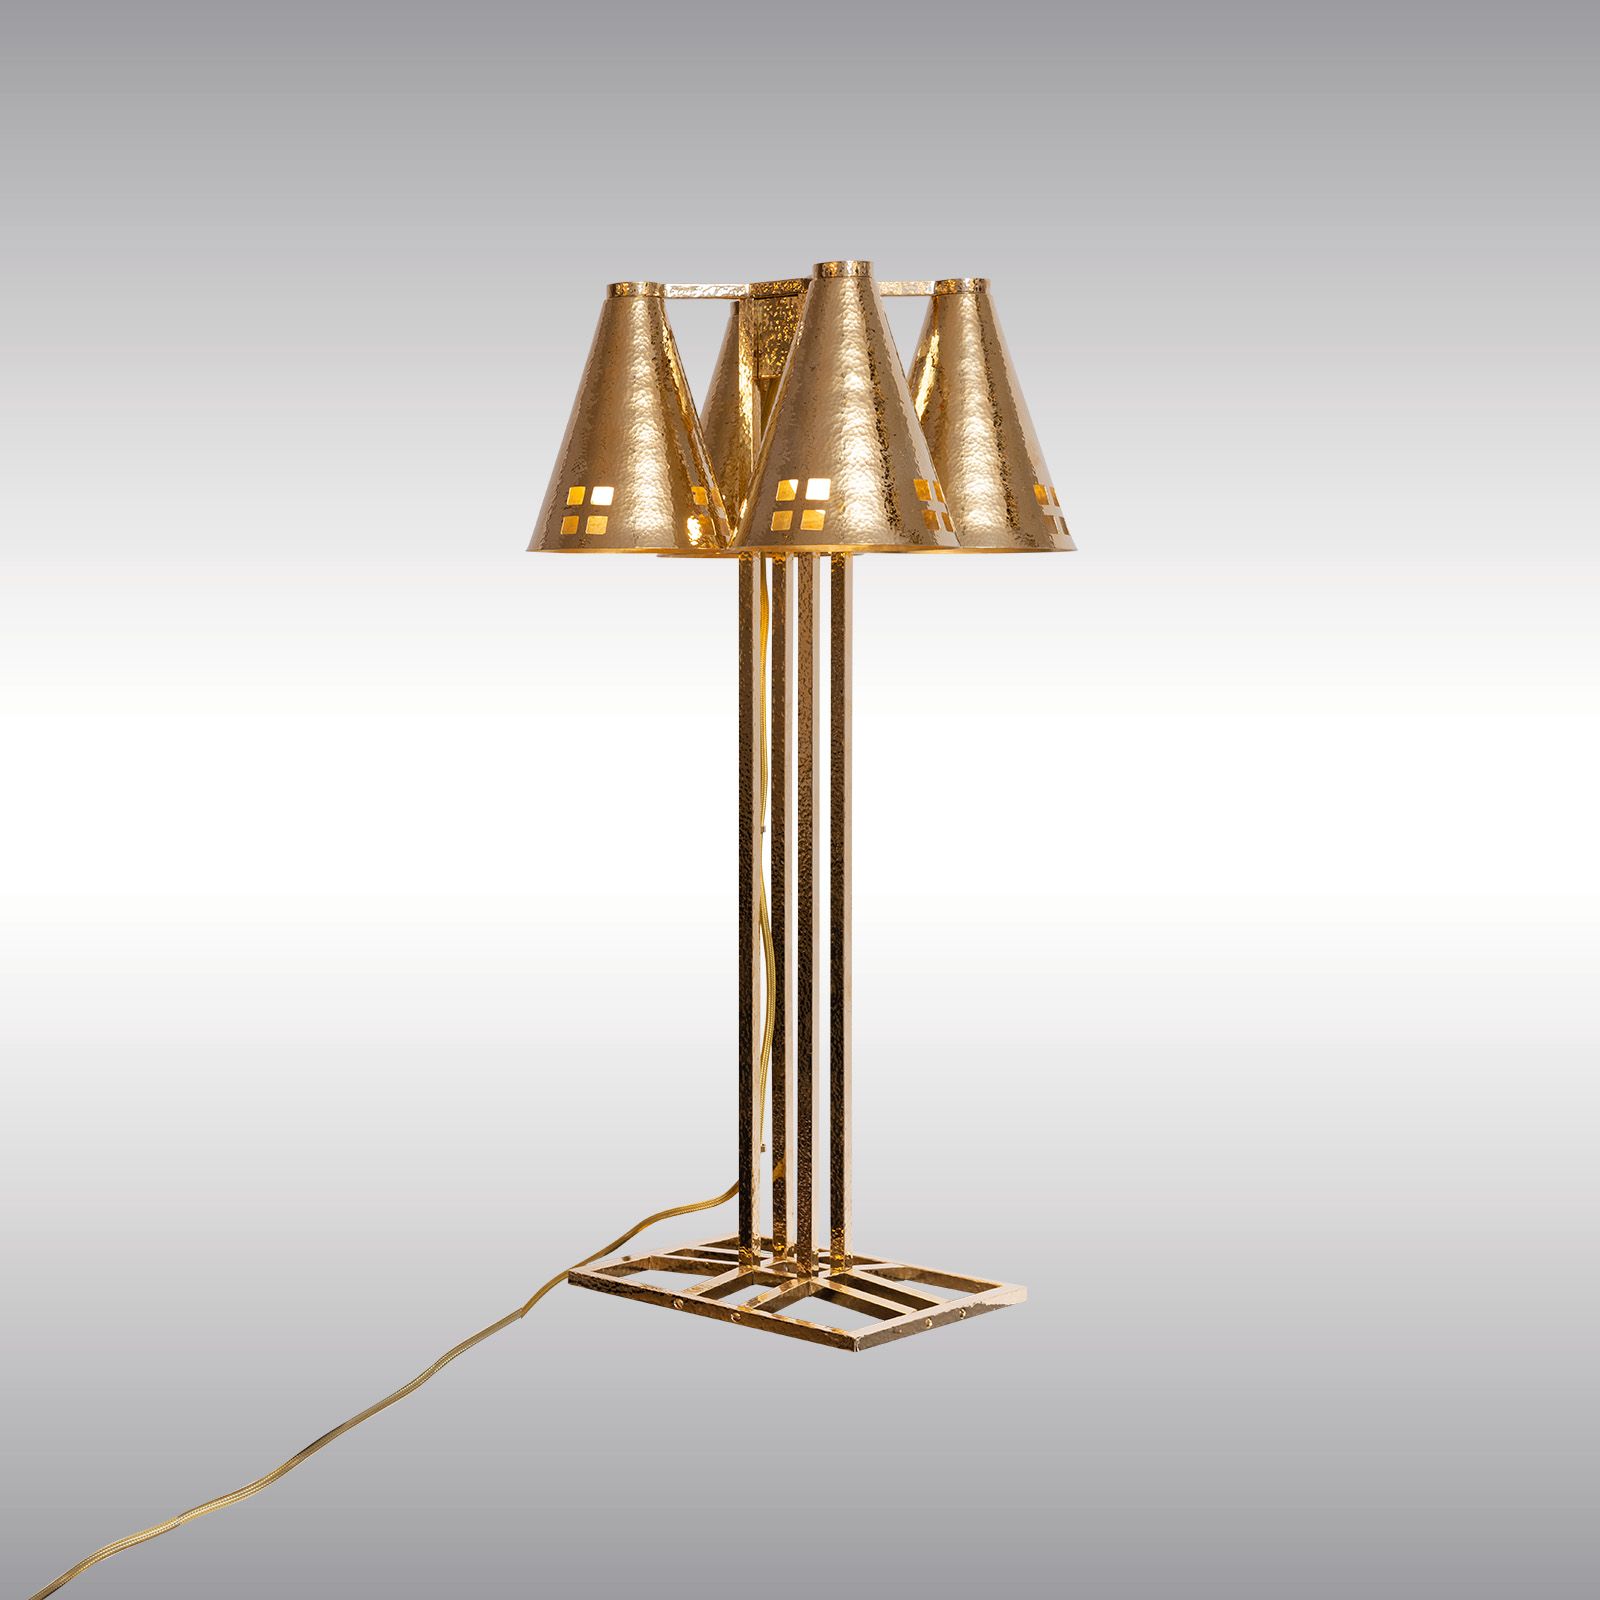 WOKA LAMPS VIENNA - OrderNr.: 22002|Cubistic Josef Hoffmann Table Lamp from 1903 - Design: Josef Hoffmann